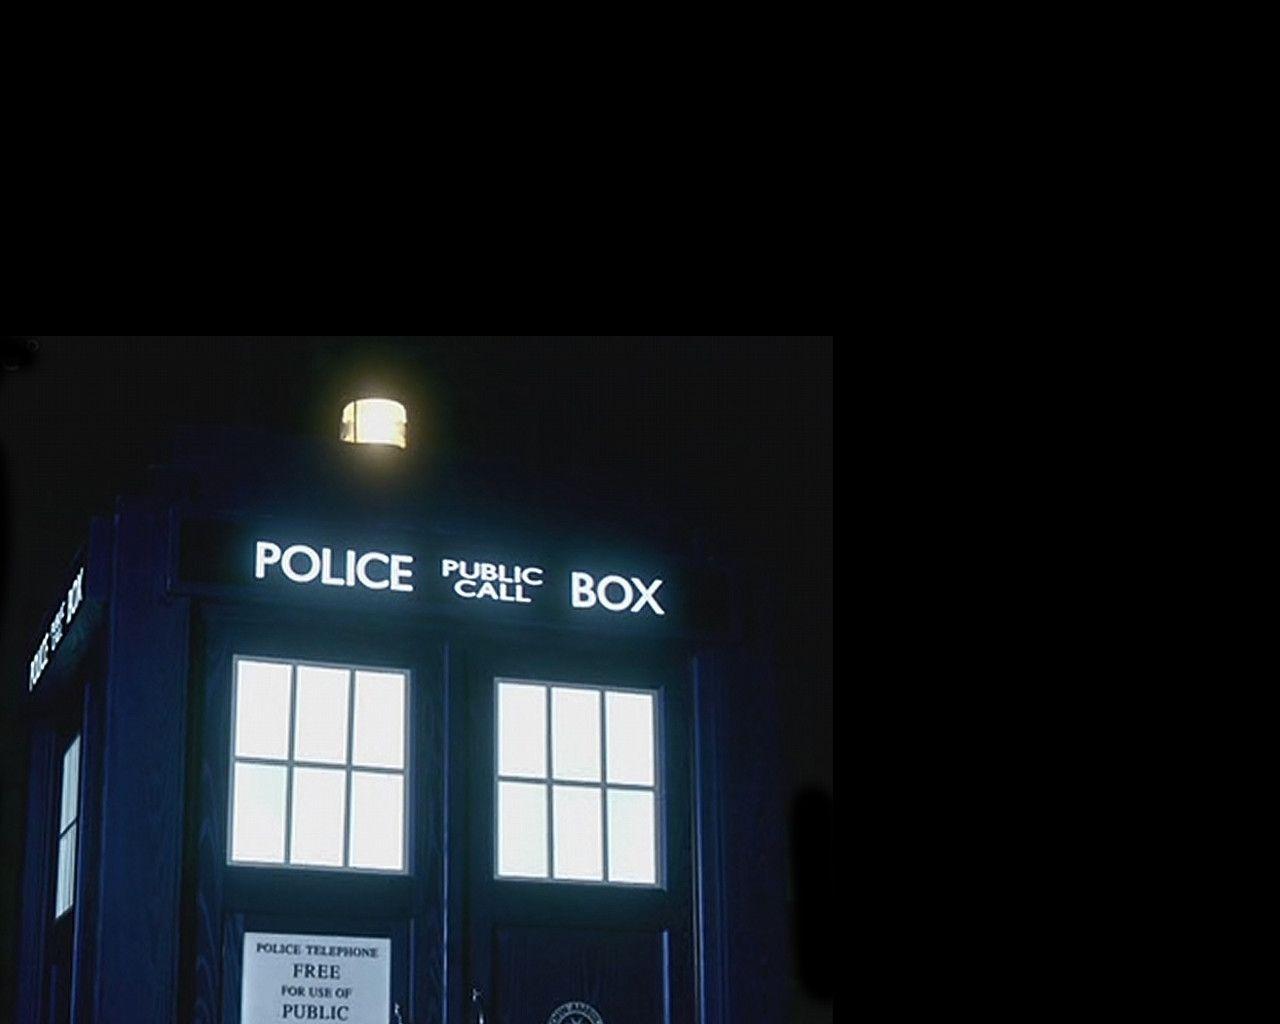 Doctor Who Wallpaper Tardis Wallpaper 1280x1024PX Wallpaper